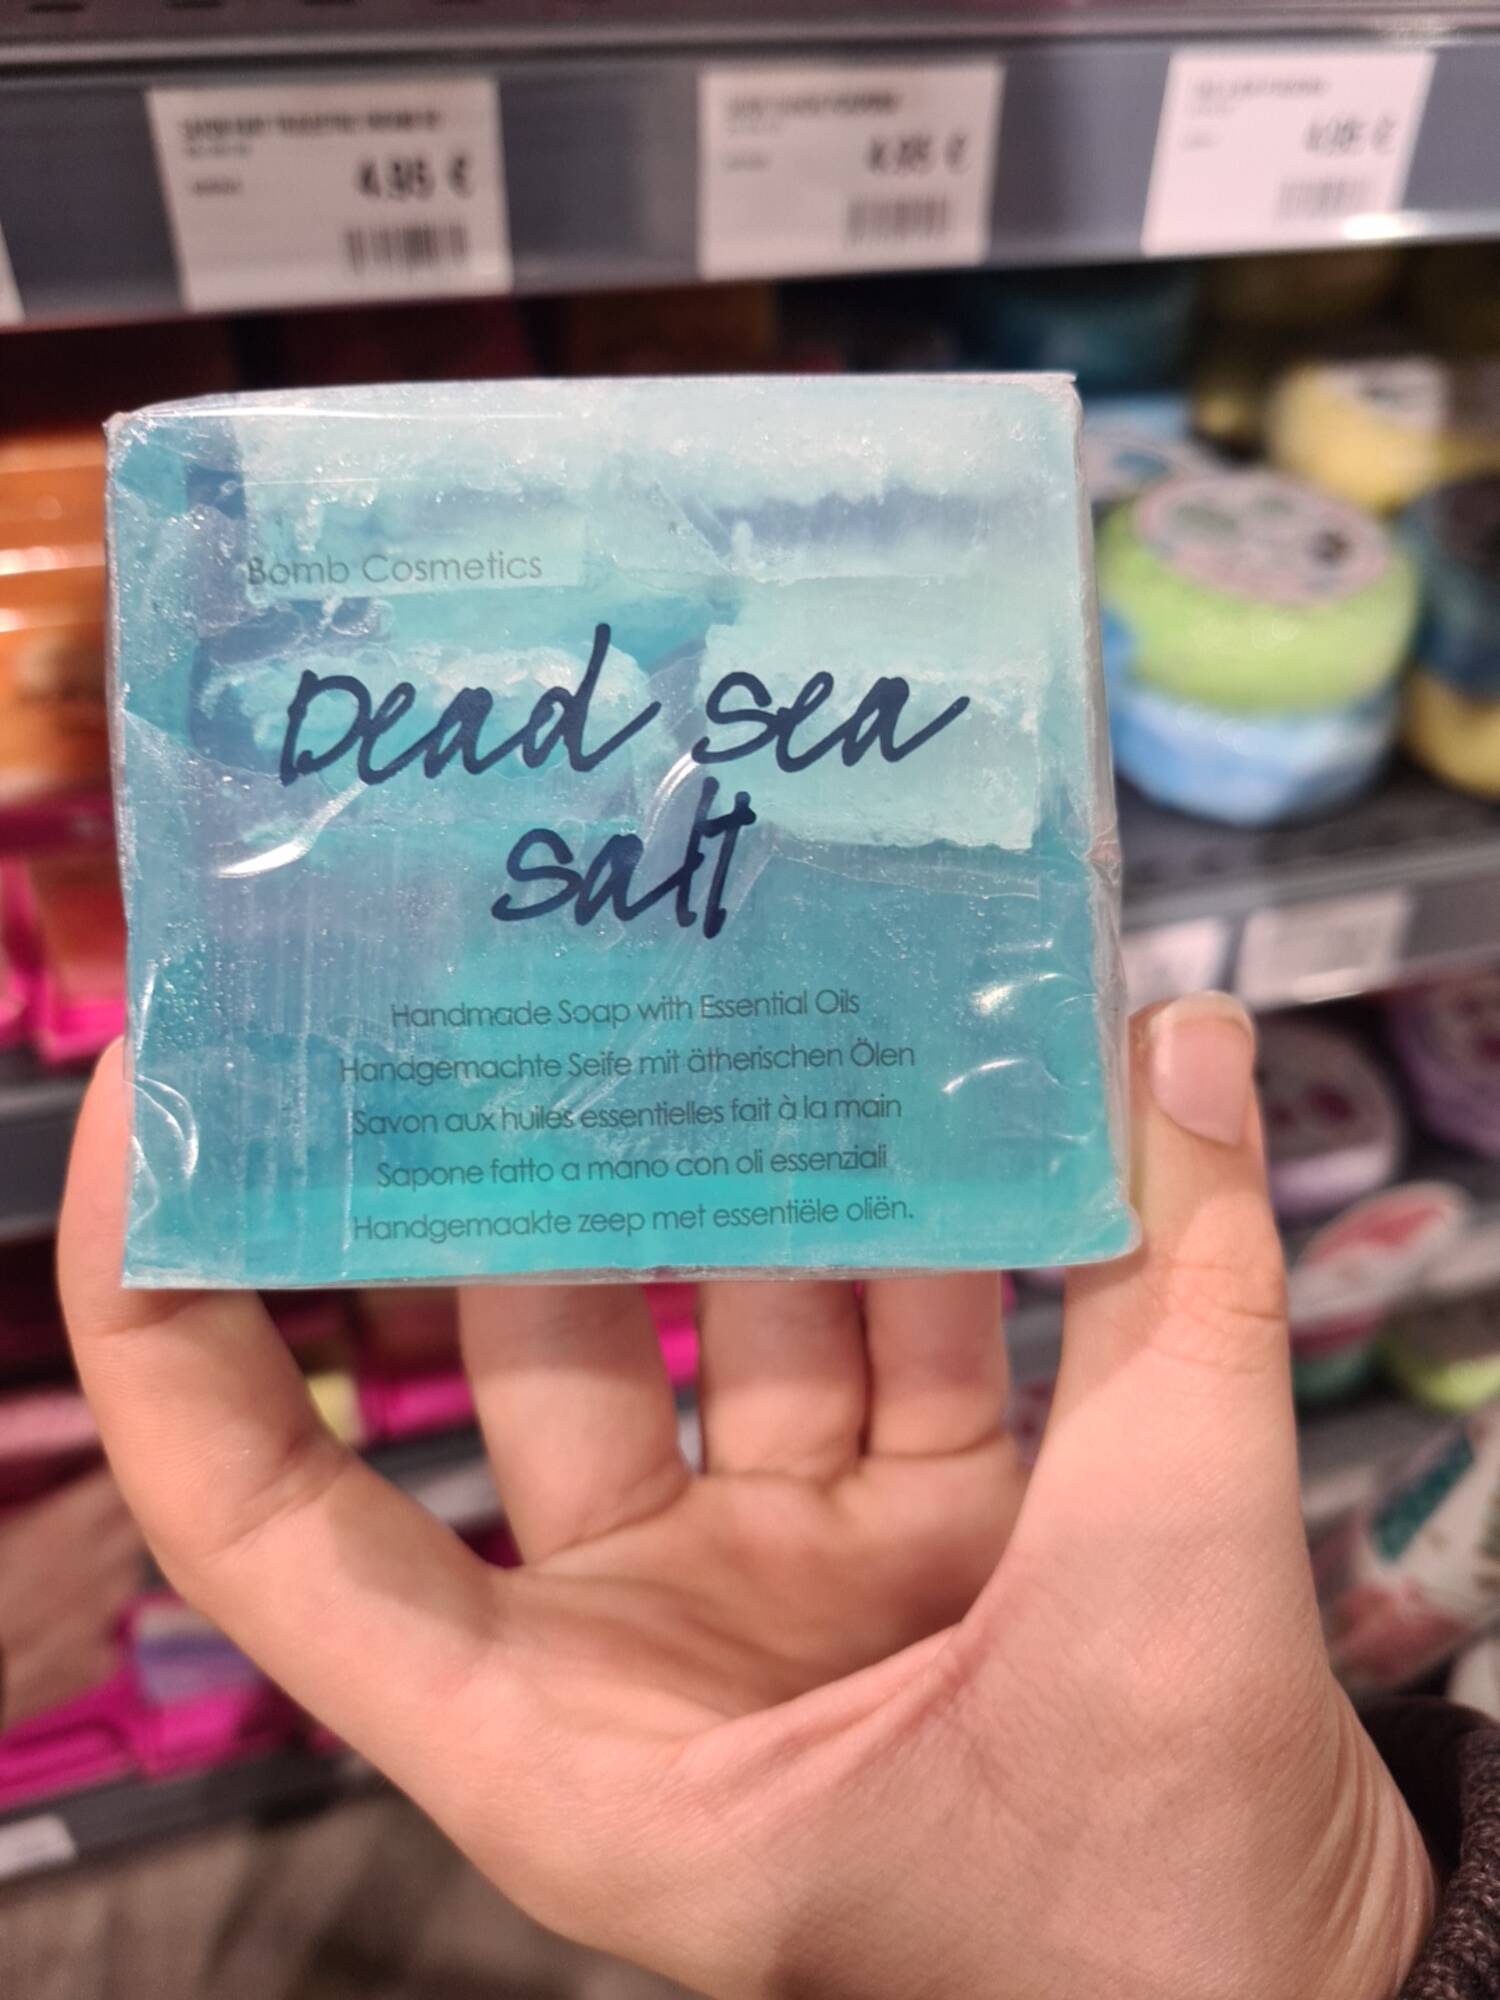 BOMB COSMETICS - Dead sea salt - Savon aux huiles essentielles 